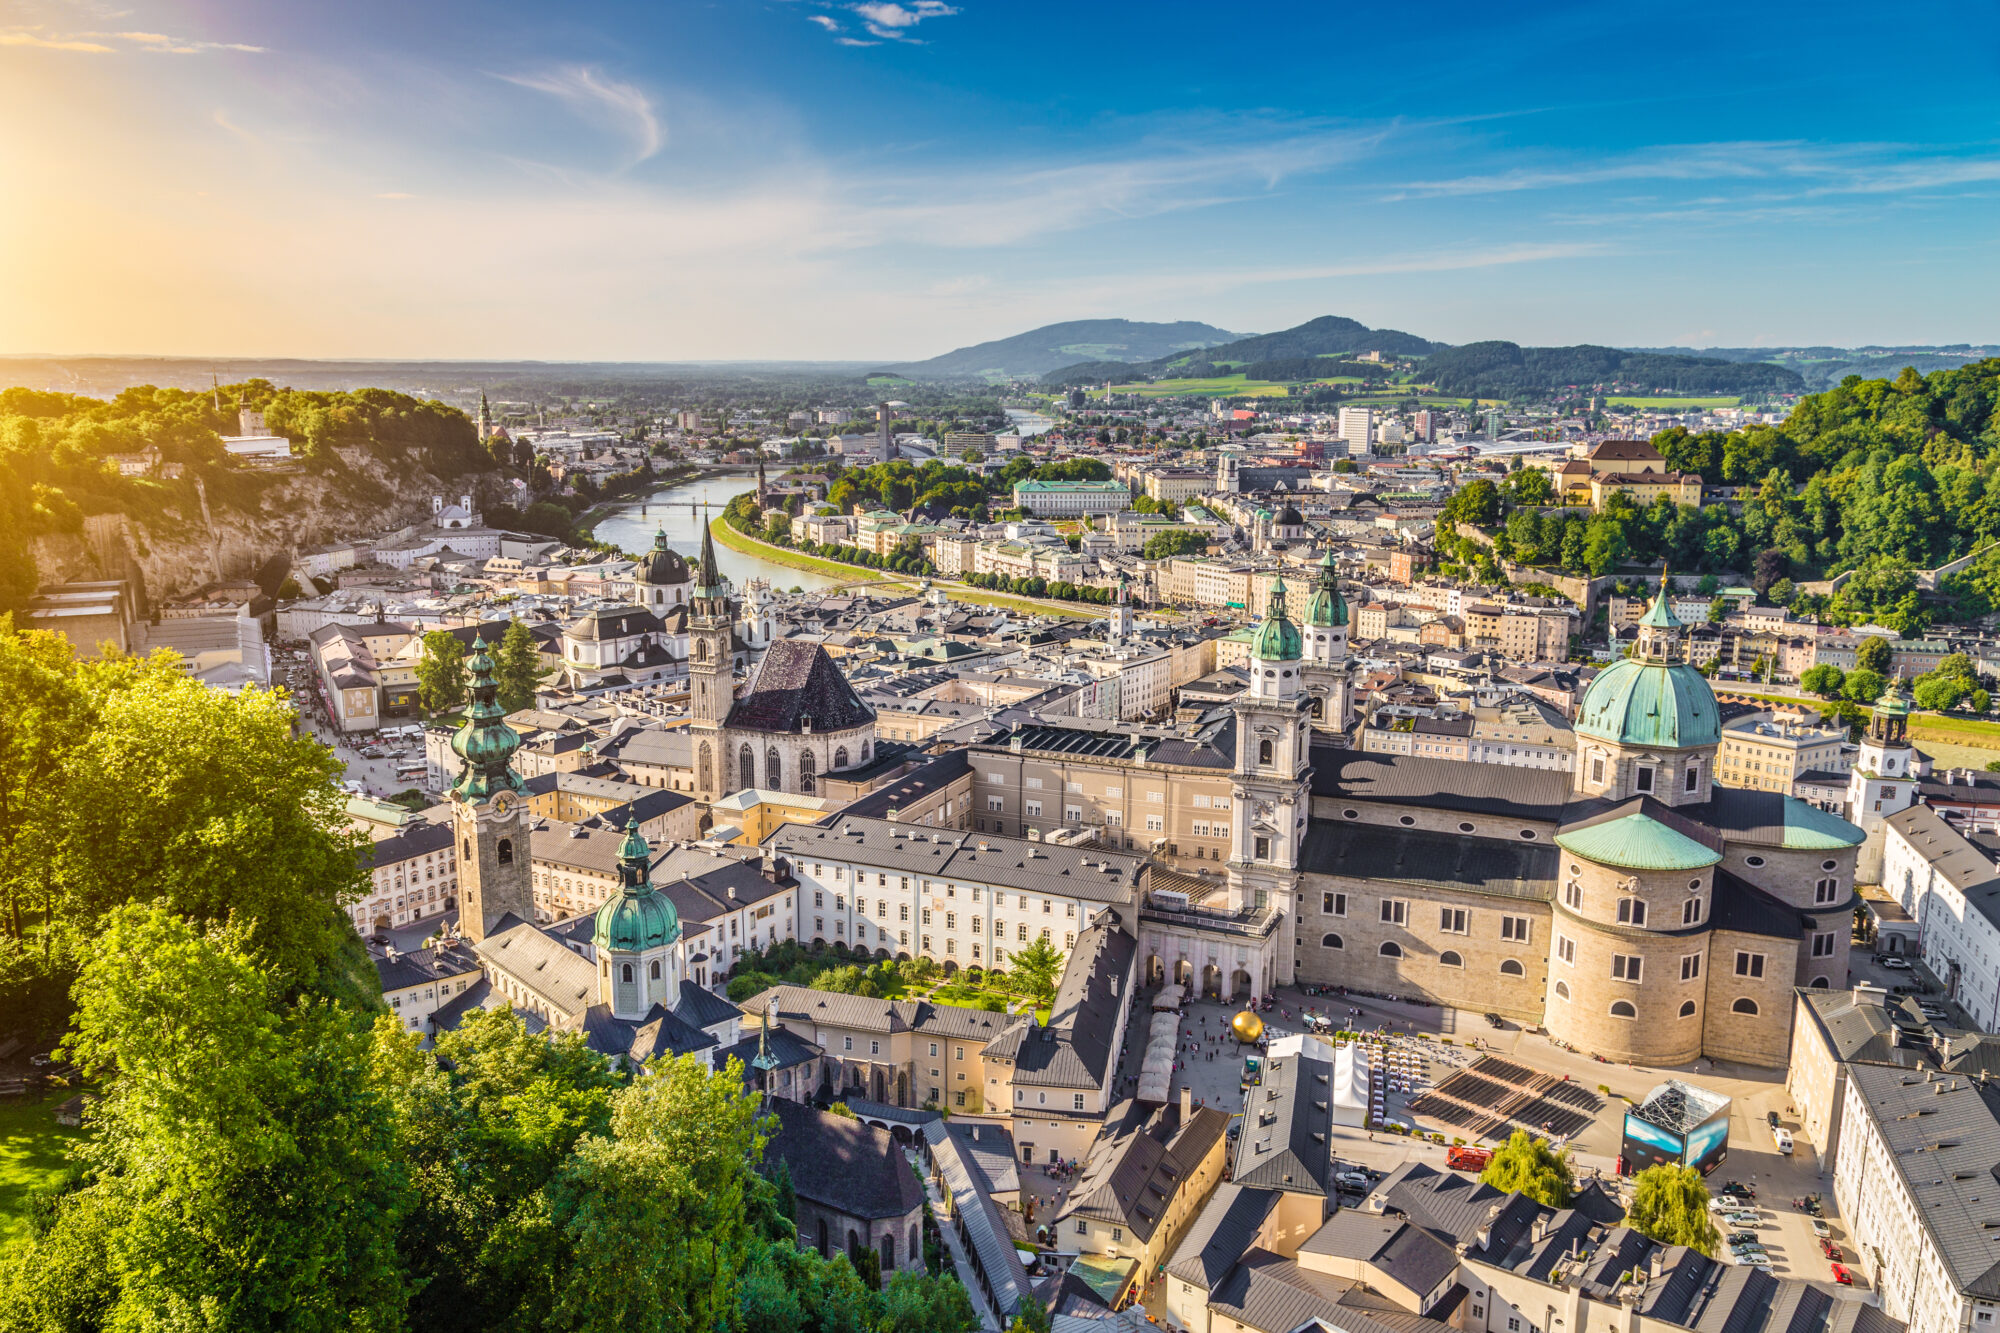 Aerial view of the historic city of Salzburg at sunset, Salzburger Land, Austria.